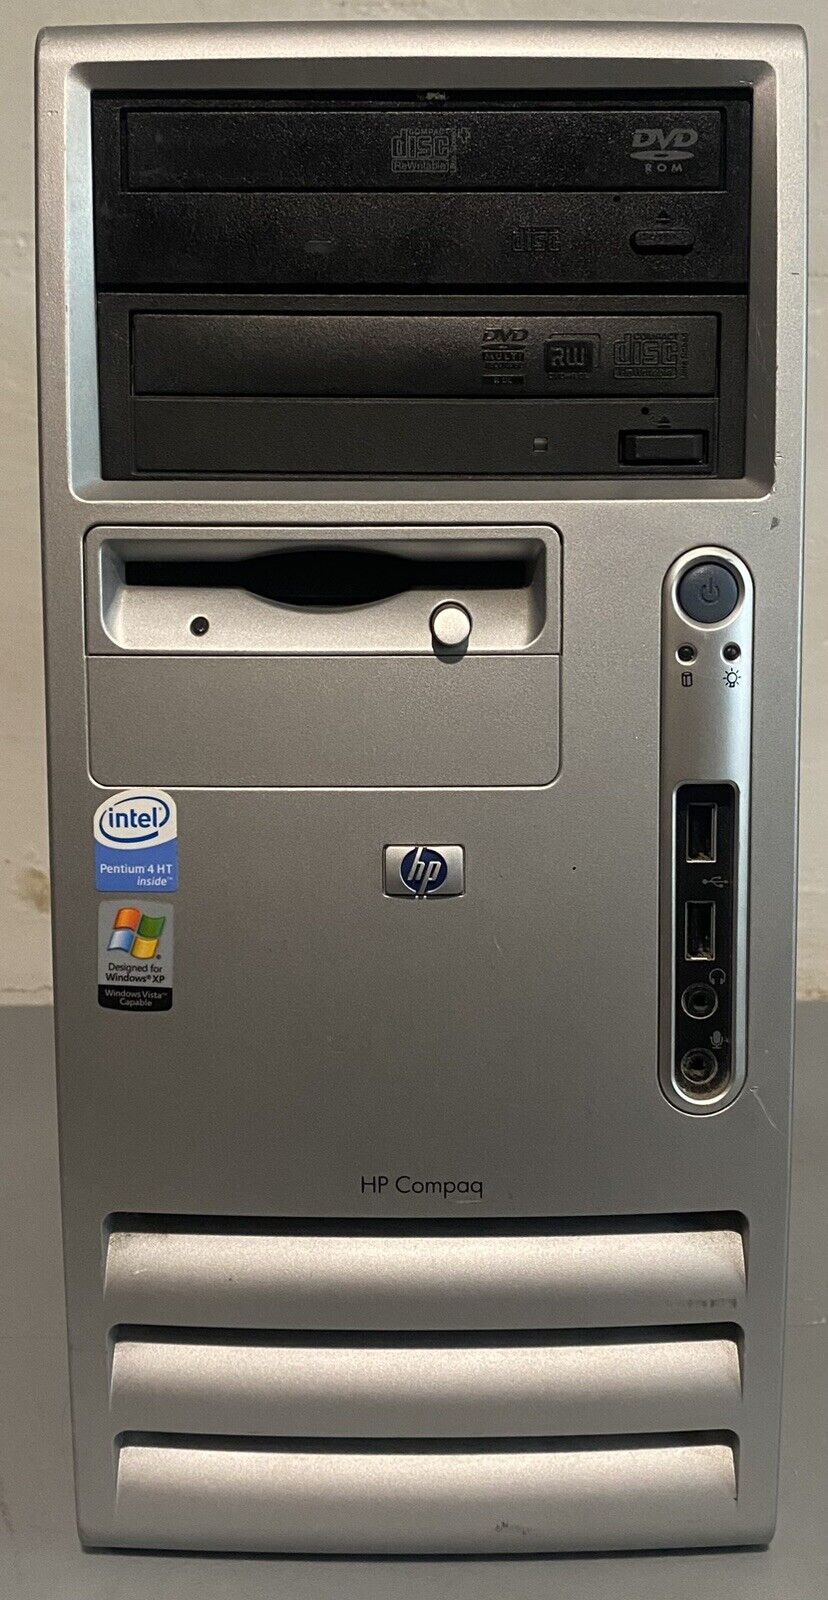 HP Compaq dc5100 Intel Pentium 4 @ 3.2GHz, 1GB Ram - No OS/HDD